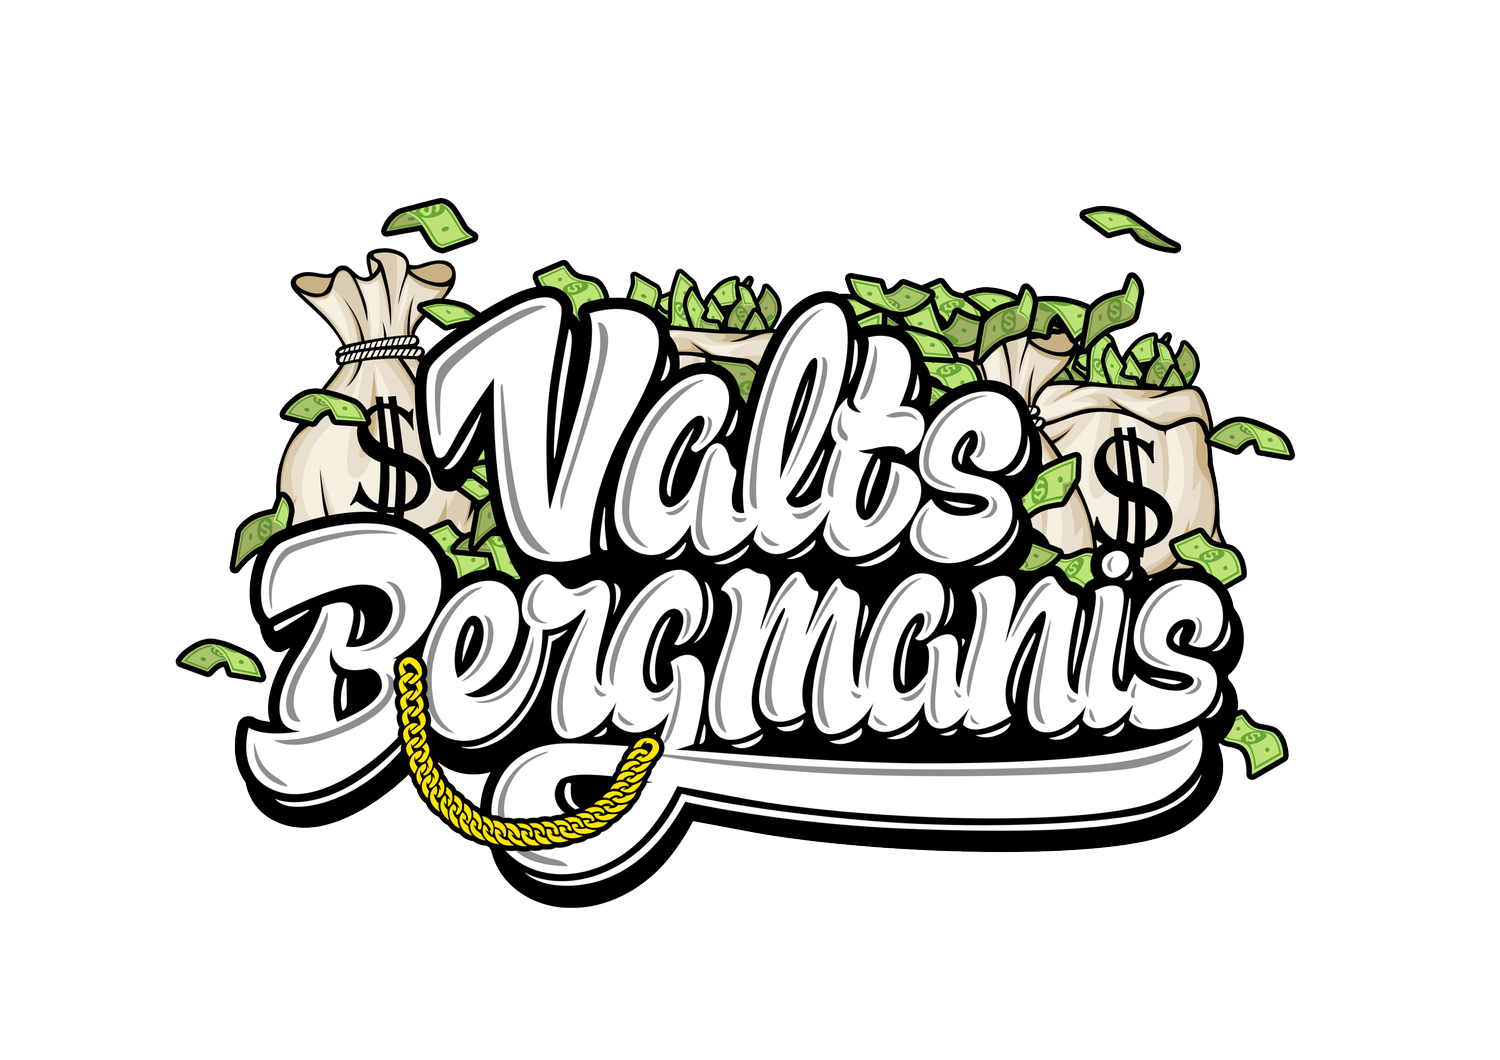 VISUALS BY VALTS BERGMANIS